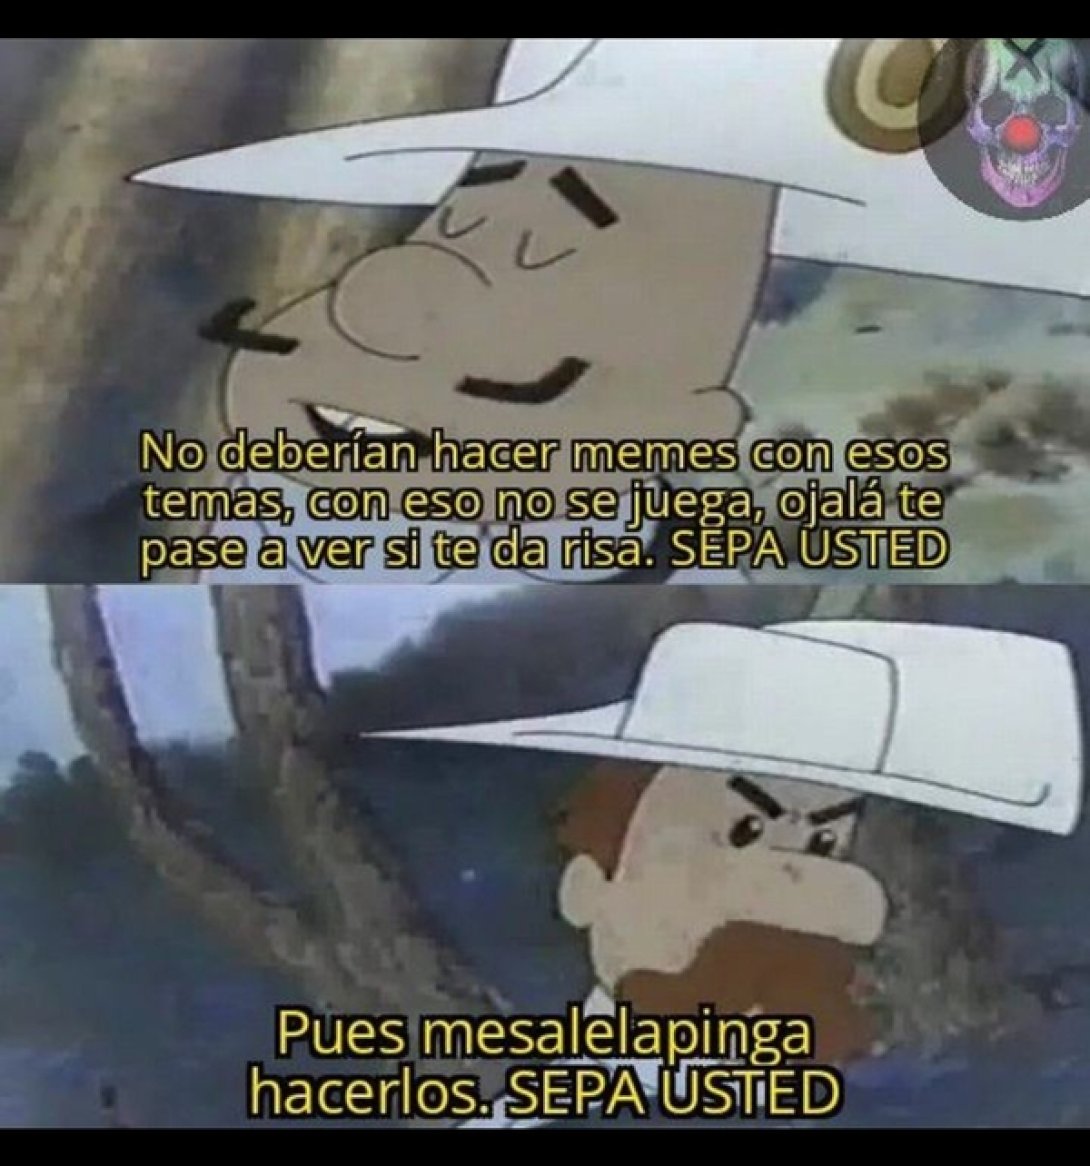 Meme de LINLT usando la imagen de personaje del dibujo animado cubano "Elpidio Valdés".